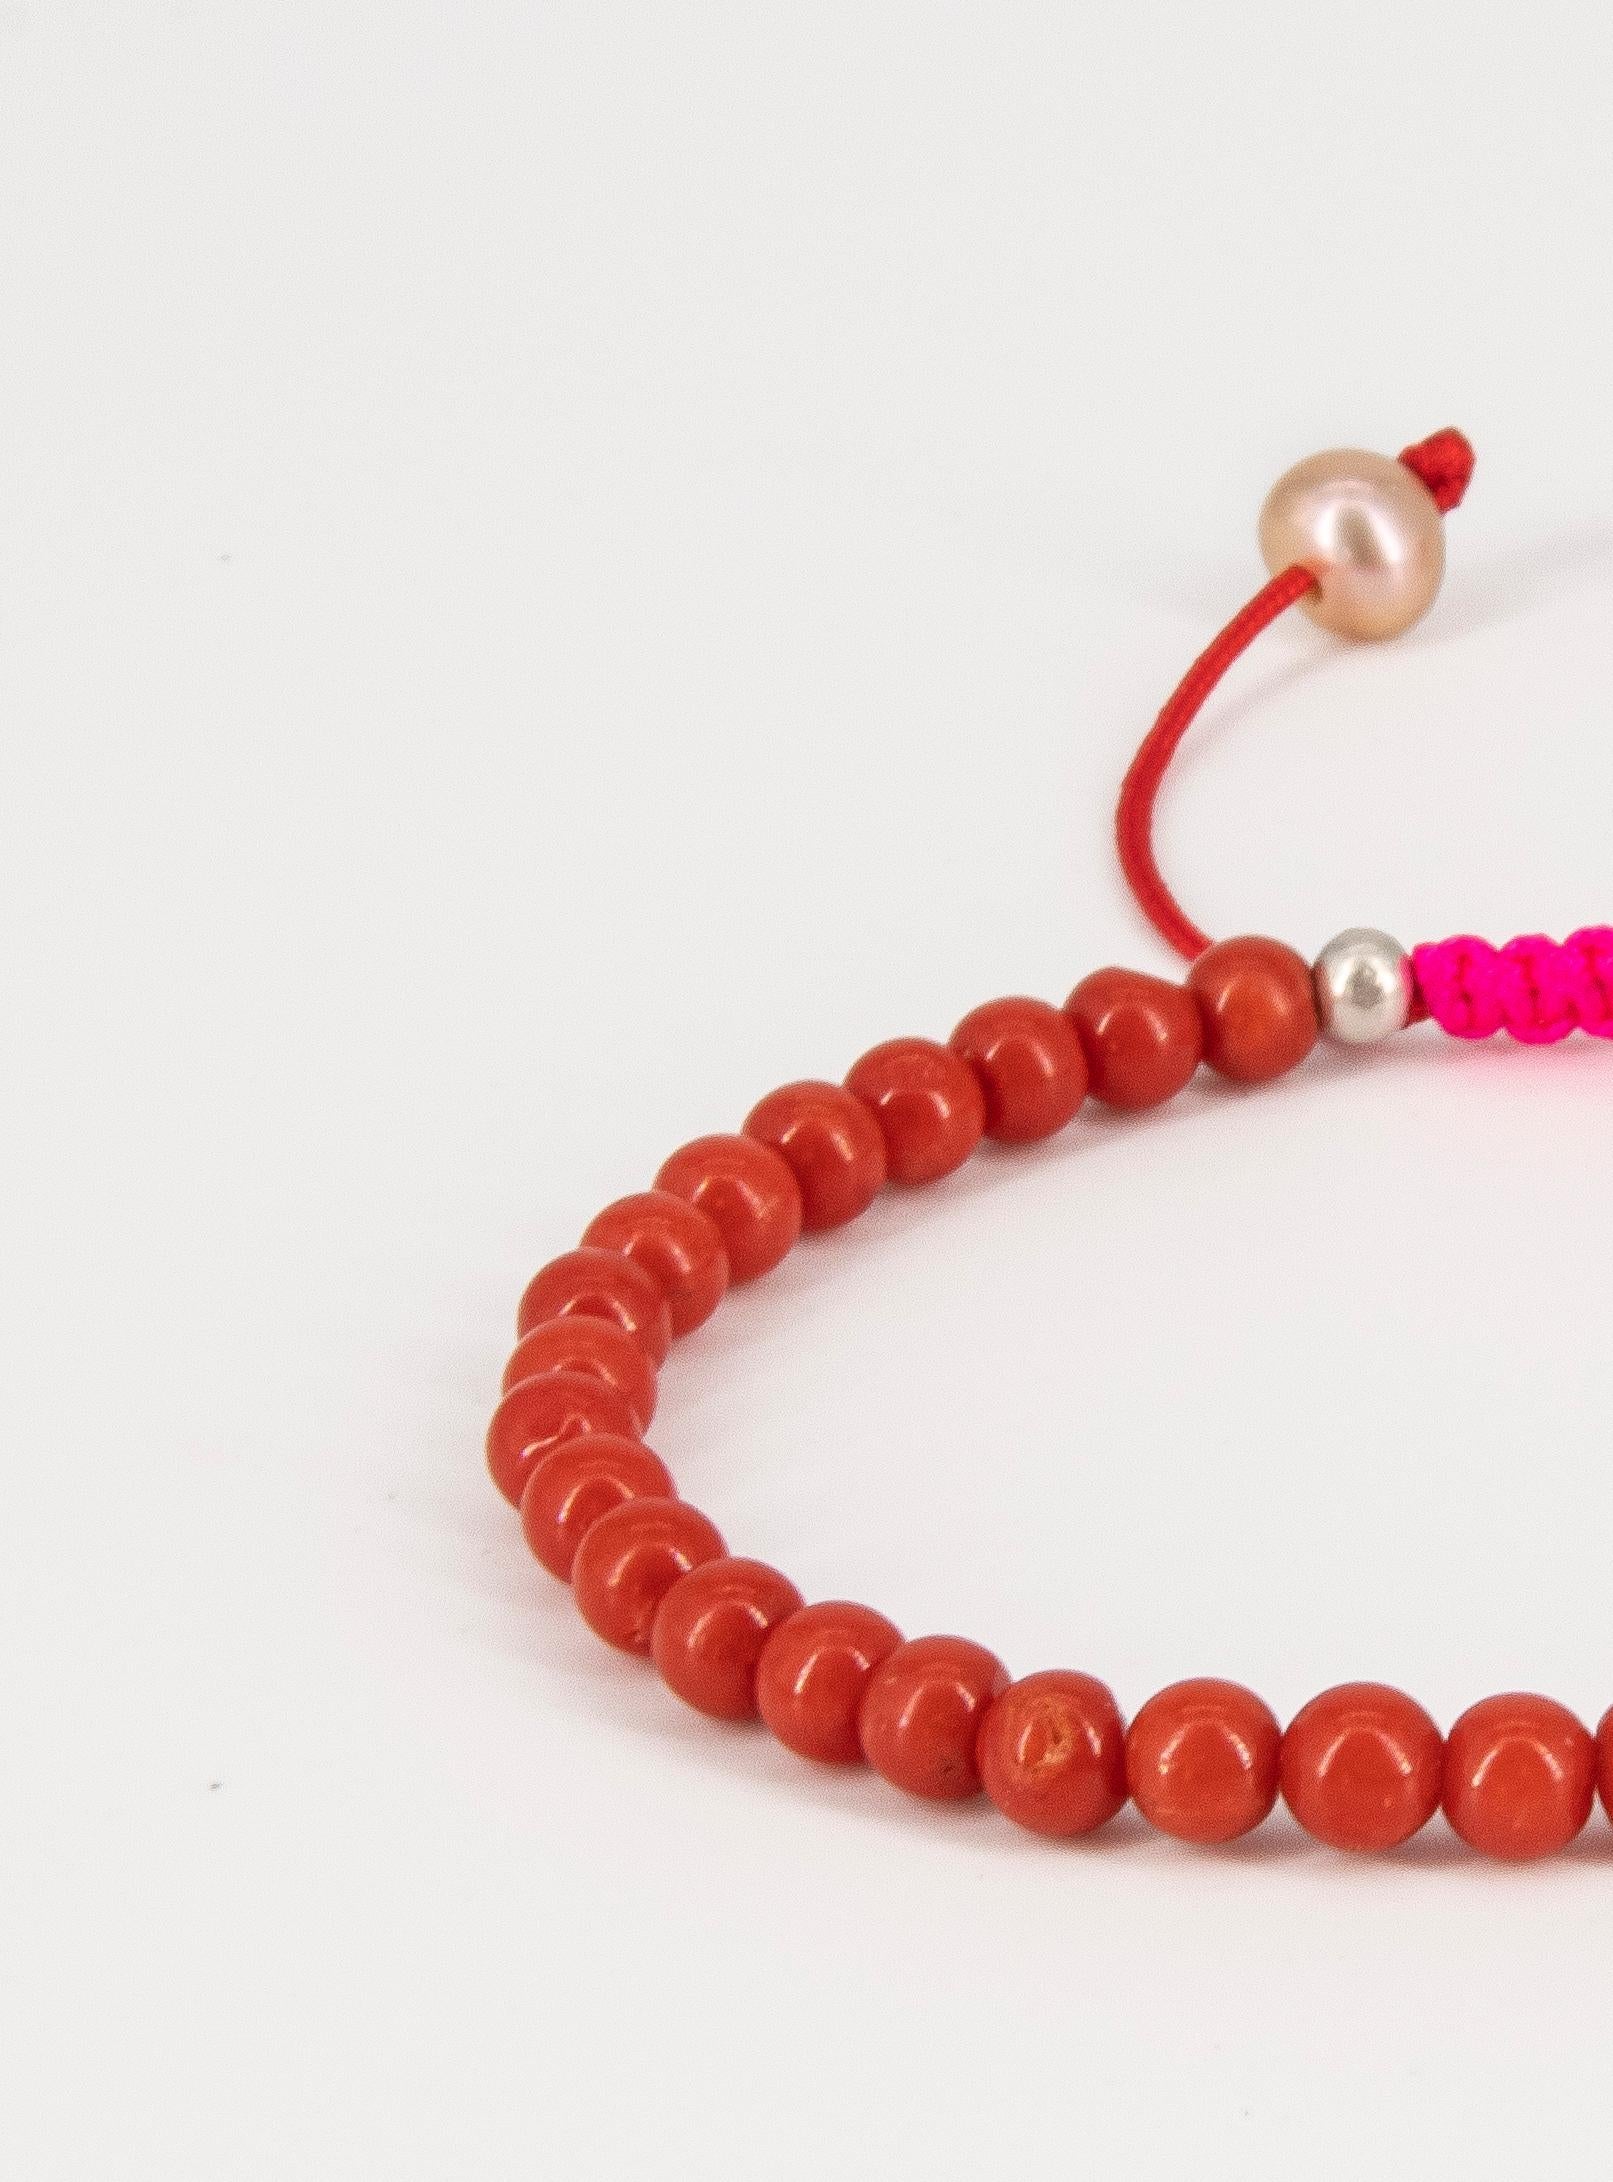 Women's or Men's Mediterranean red coral bracelet with neon pink drawstring closure